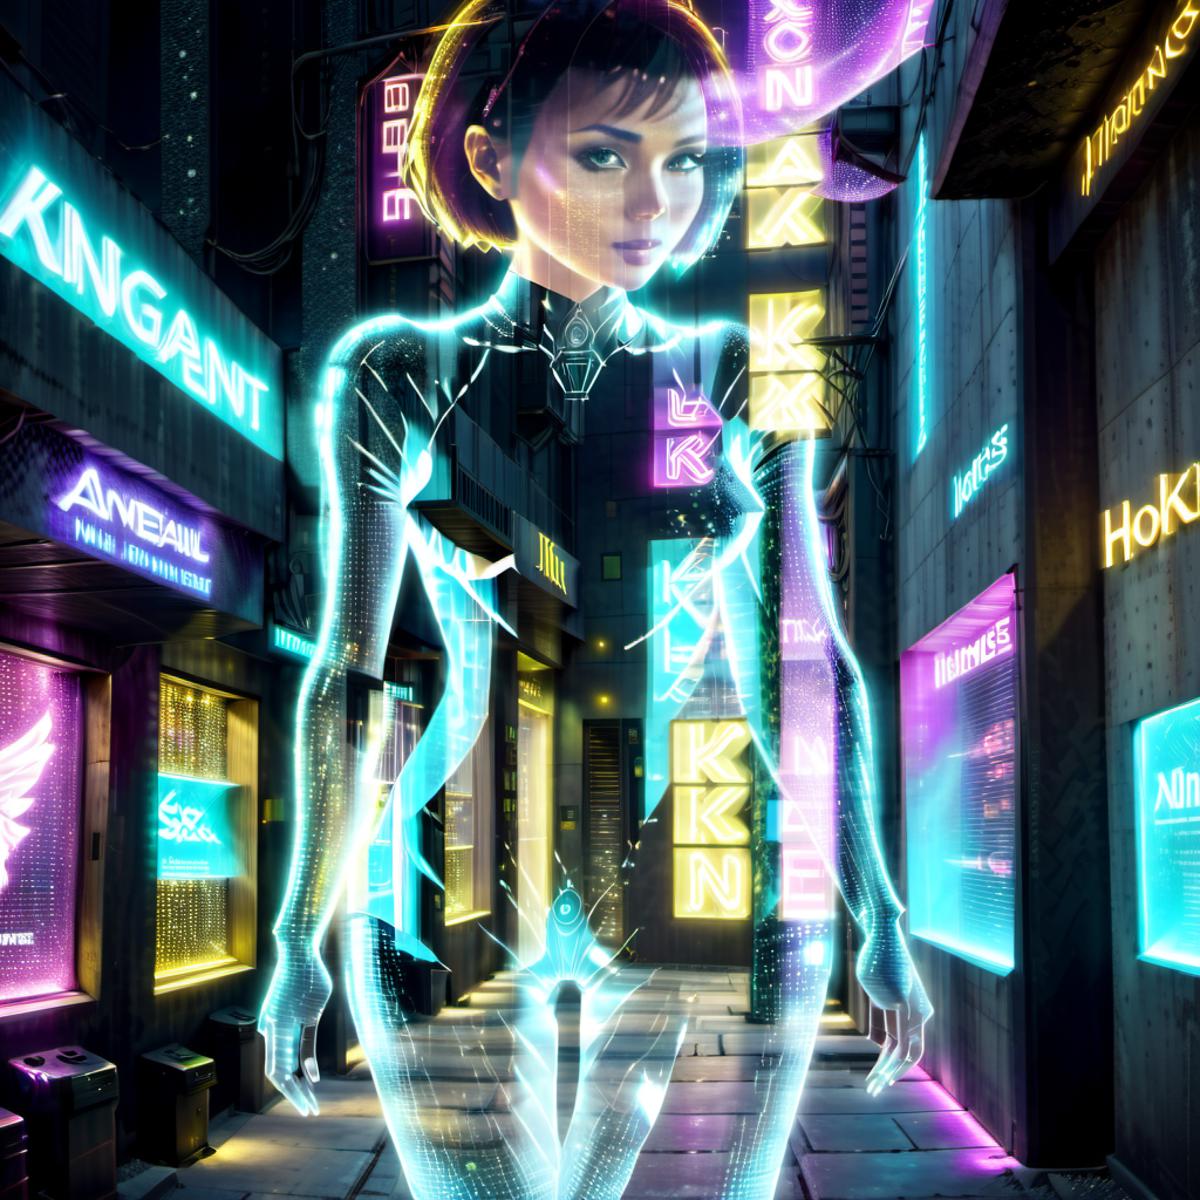 Transparent Hologram Women - Cyberpunk Influence image by Rysk